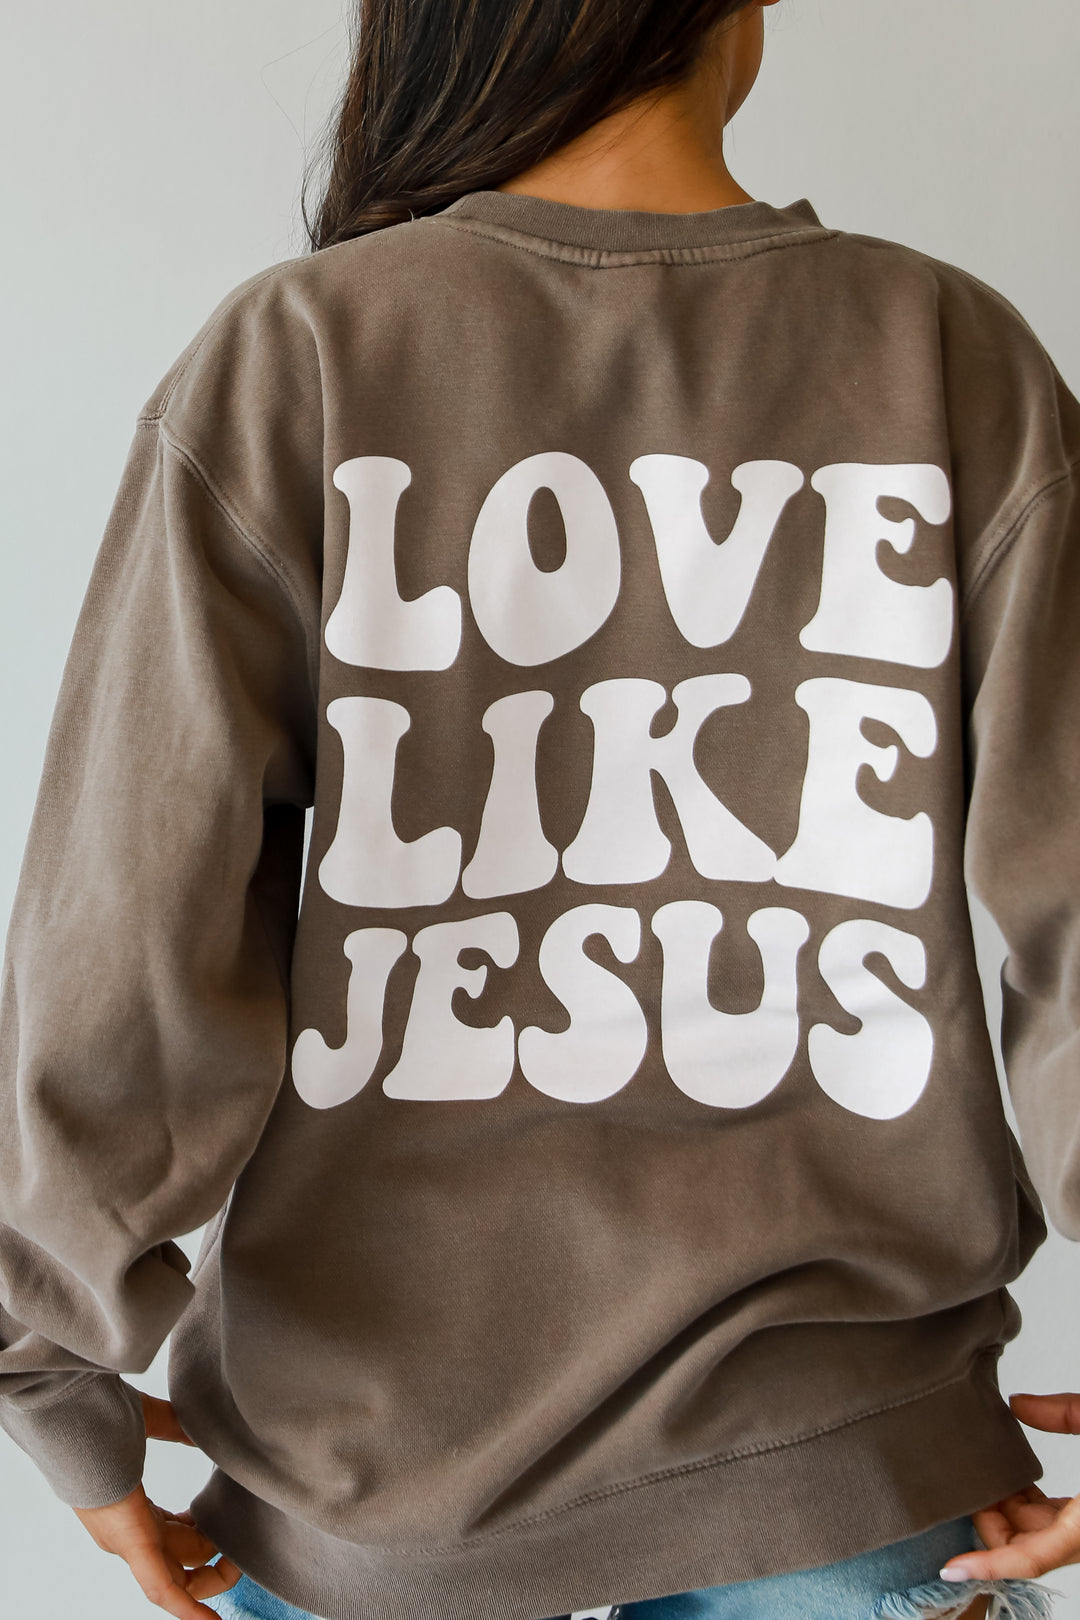 Brown Love Like Jesus Sweatshirt. Graphic Sweatshirt. Christian Trendy Sweatshirts 